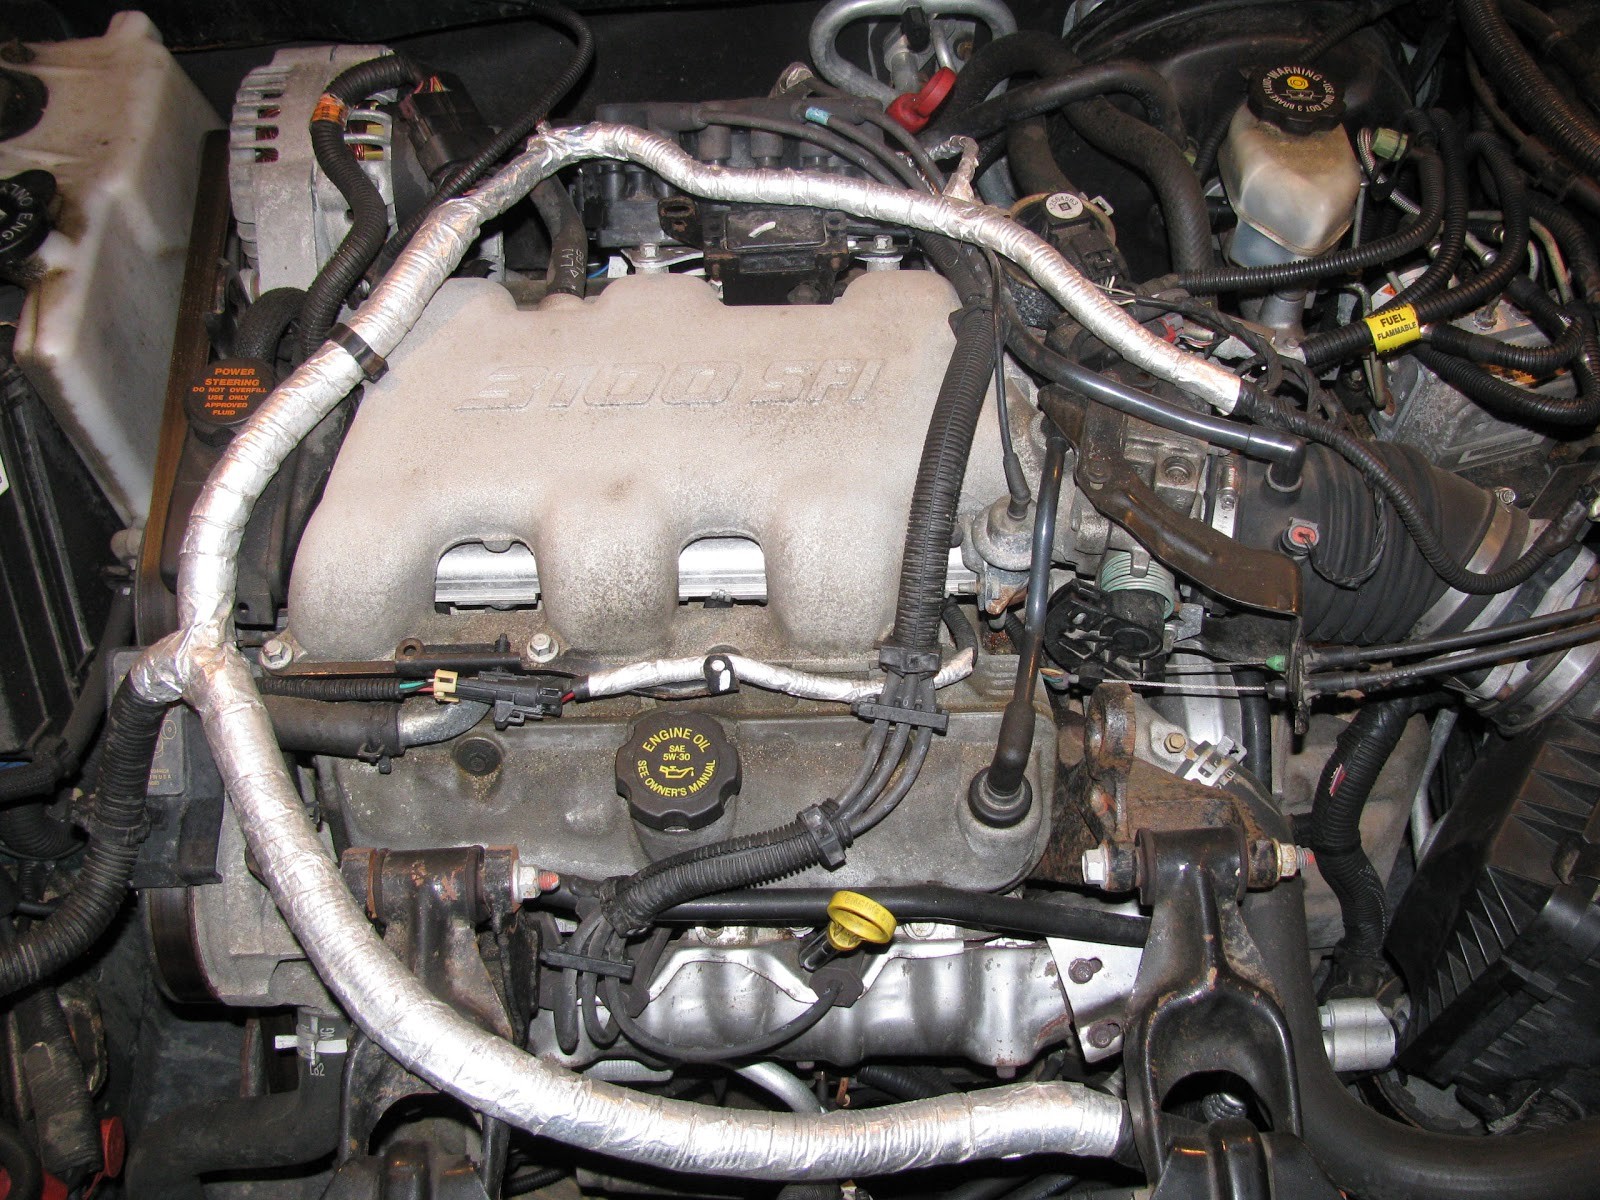 2005 Chevy Malibu Engine Diagram the original Mechanic 3 1l Engine Gm Replacing Intake Manifold Of 2005 Chevy Malibu Engine Diagram